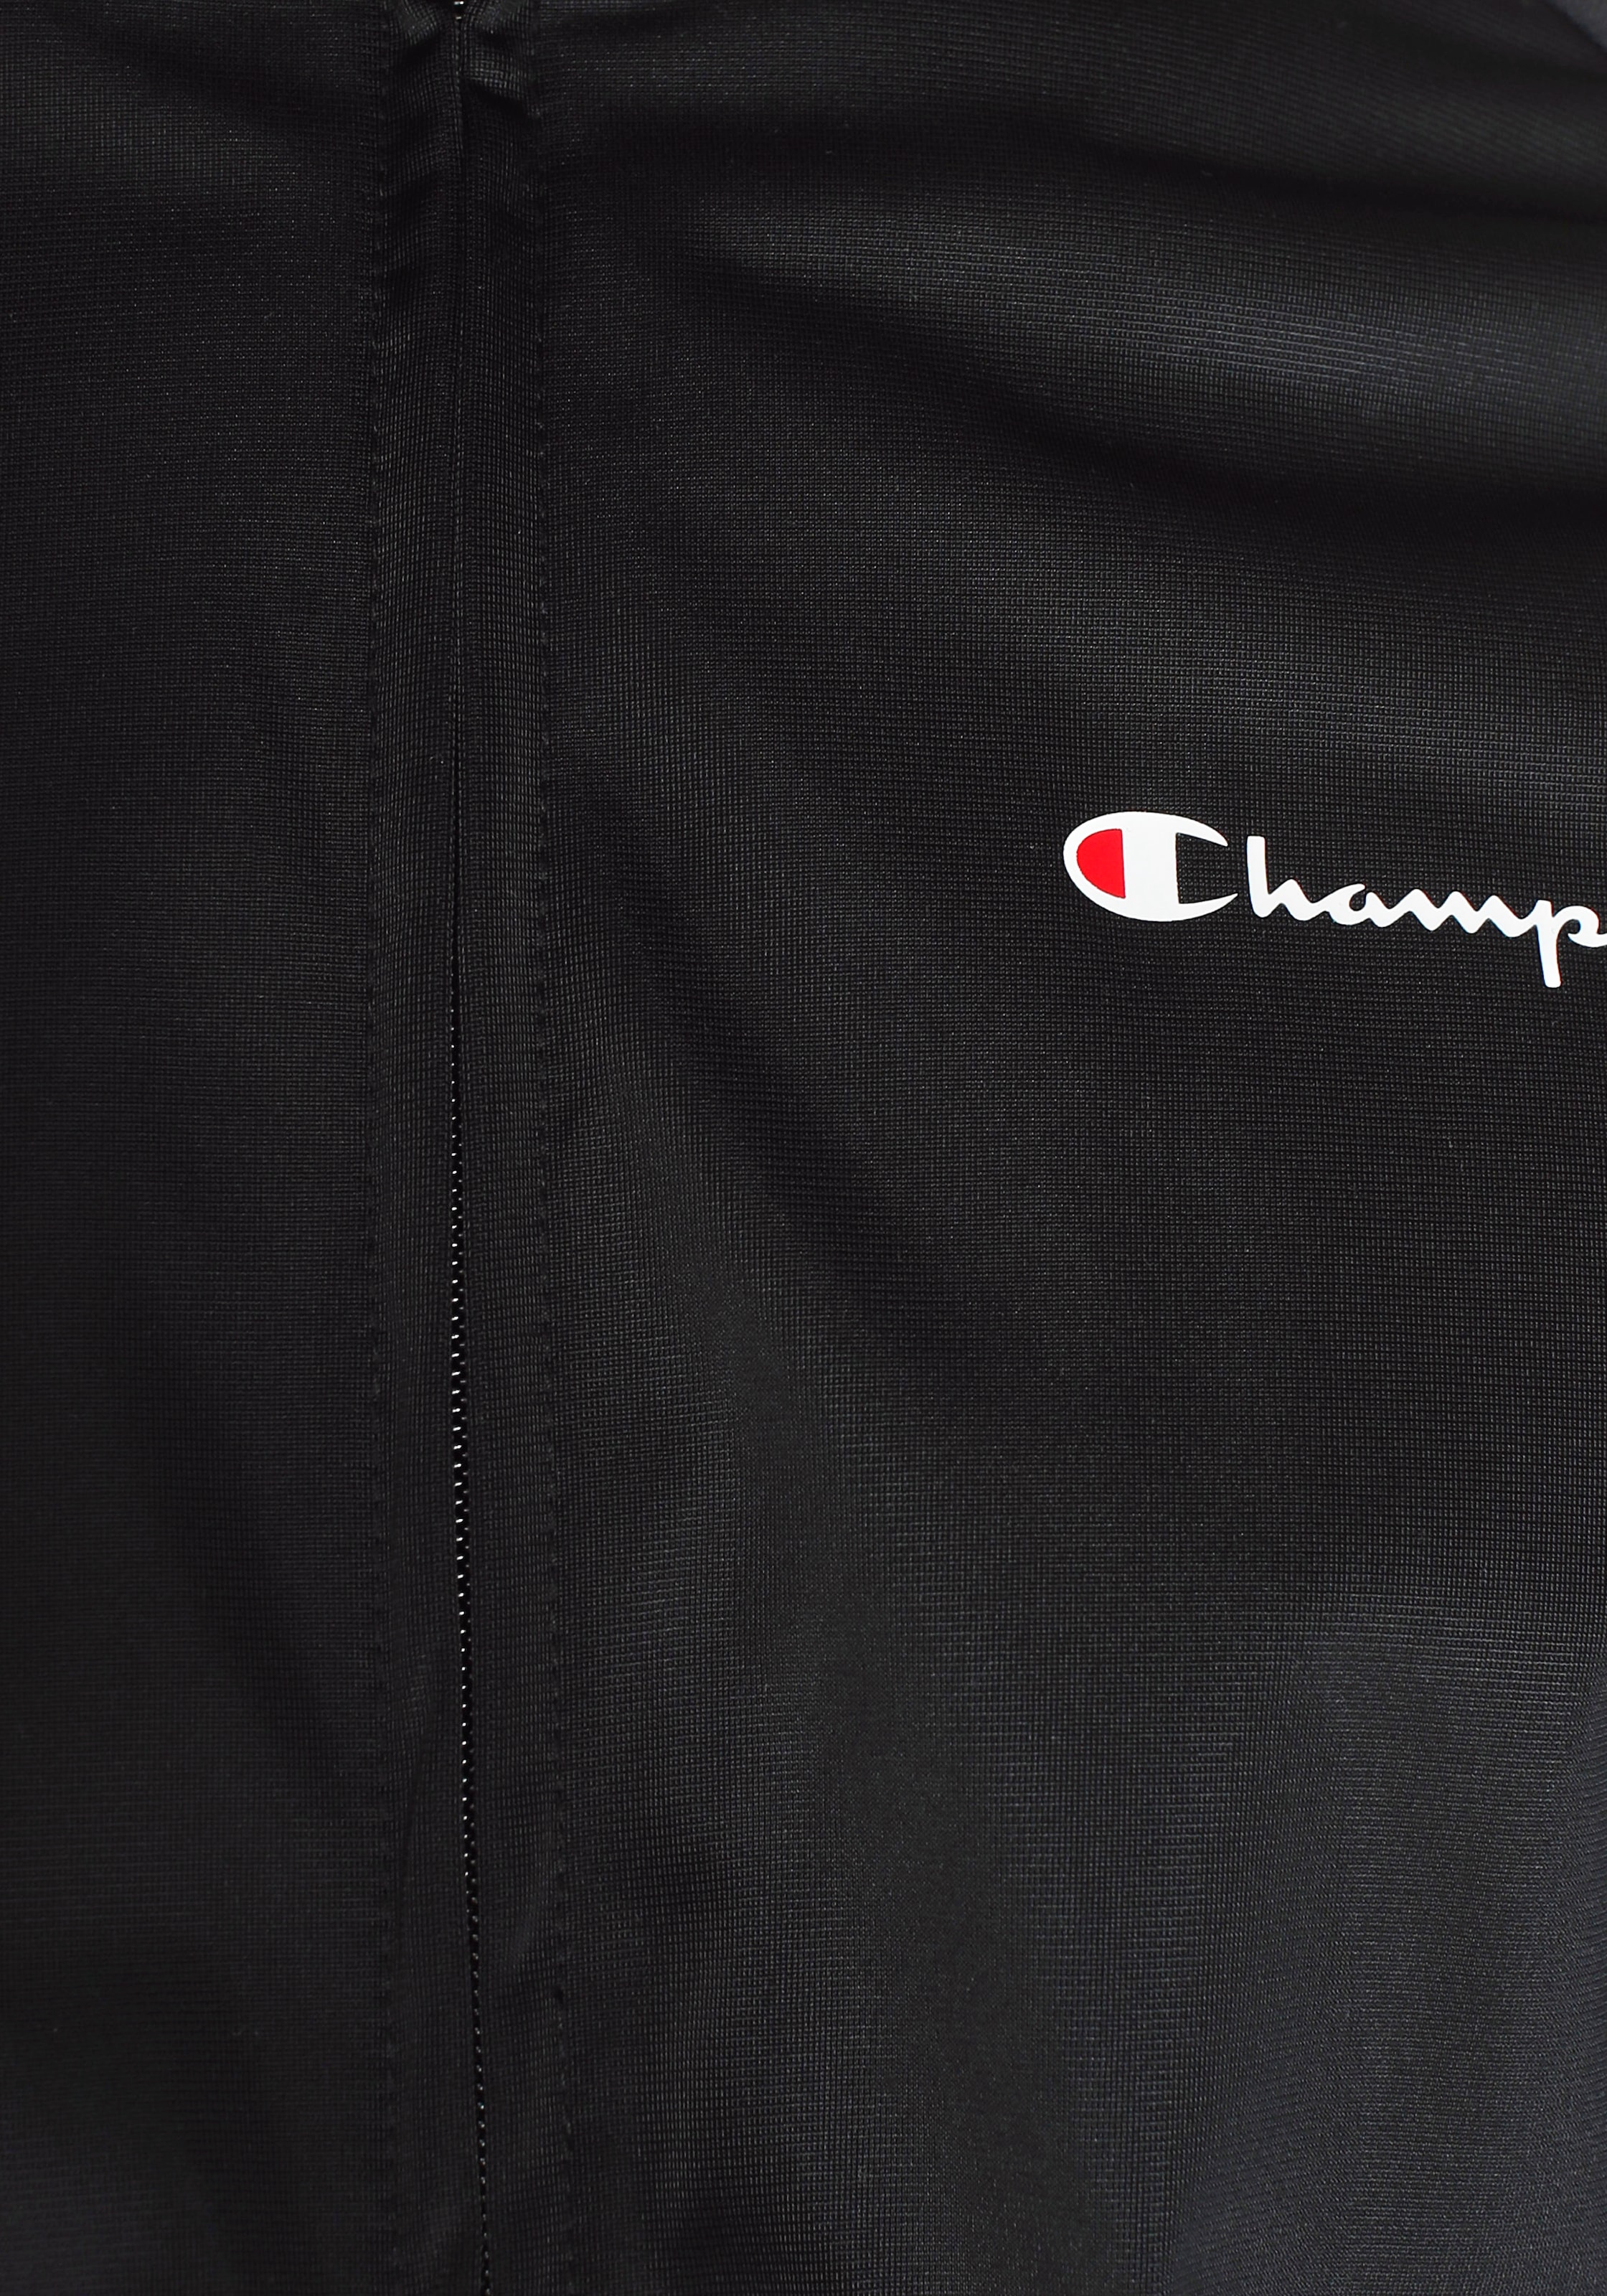 kaufen OTTO | »Classic OTTO Champion Tracksuit« Trainingsanzug online bei